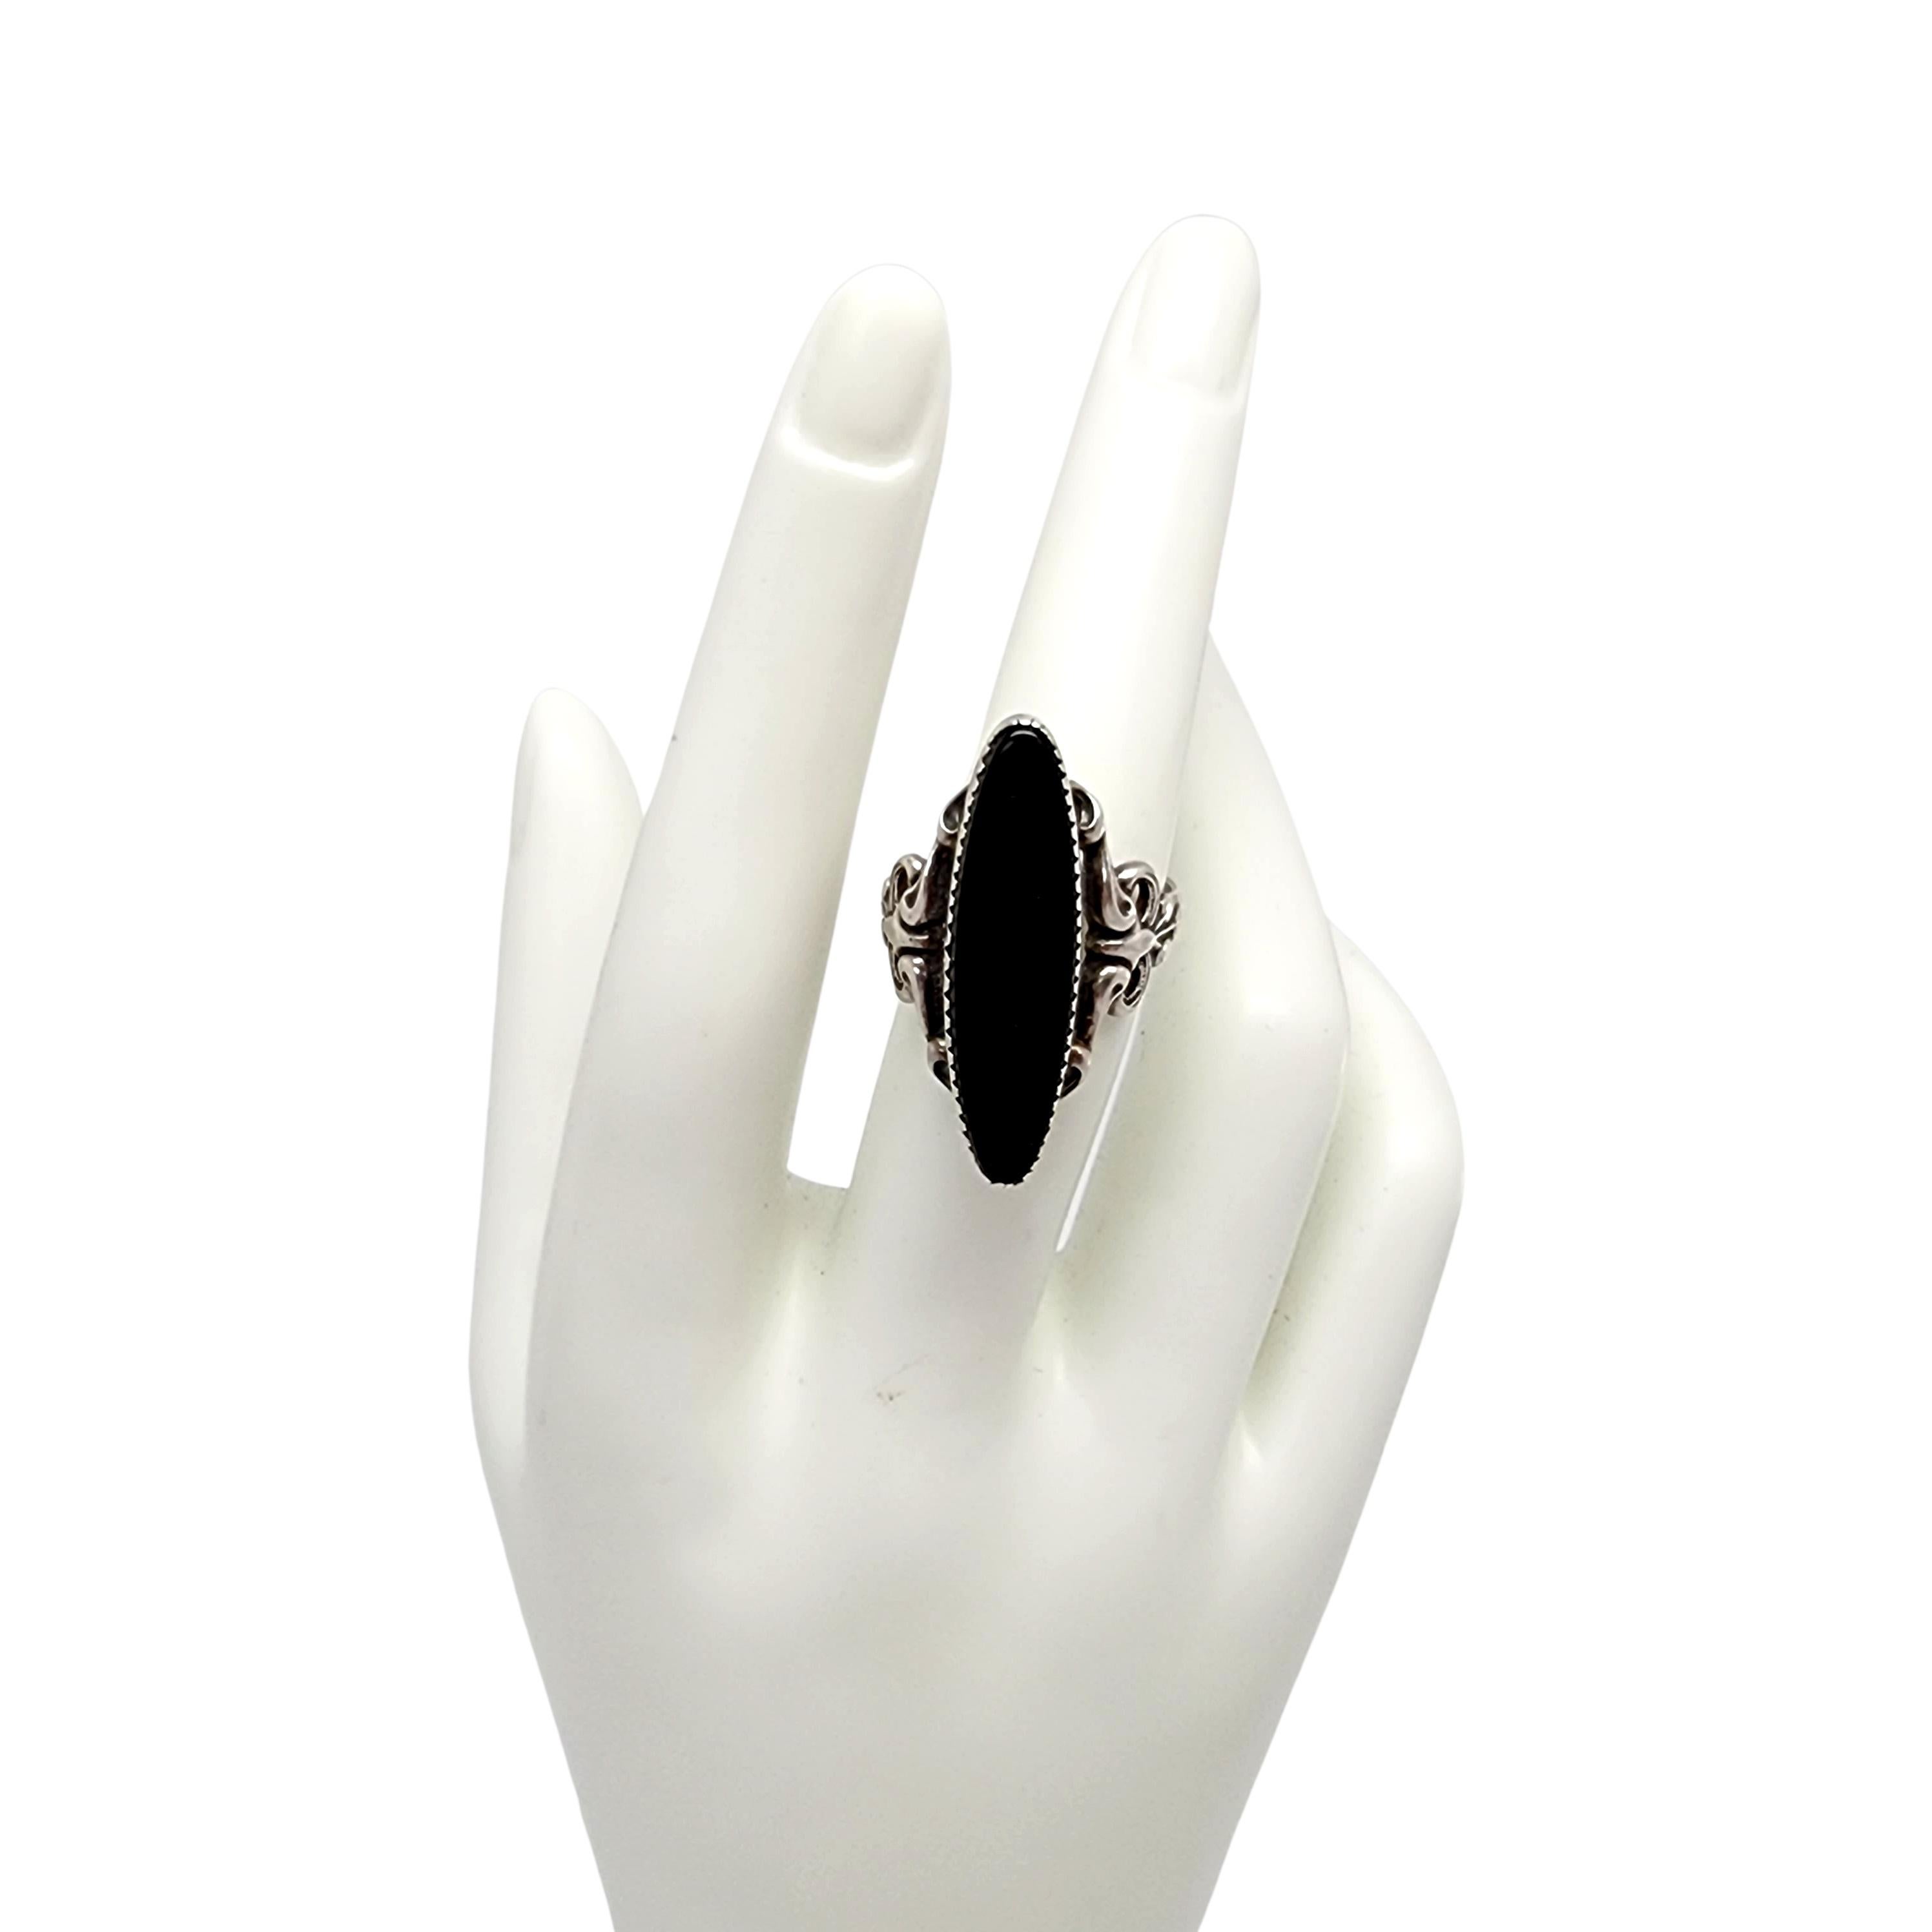 Beau Sterling Silver Sawtooth Bezel Set Onyx Ring Size 8.75  #14200 5